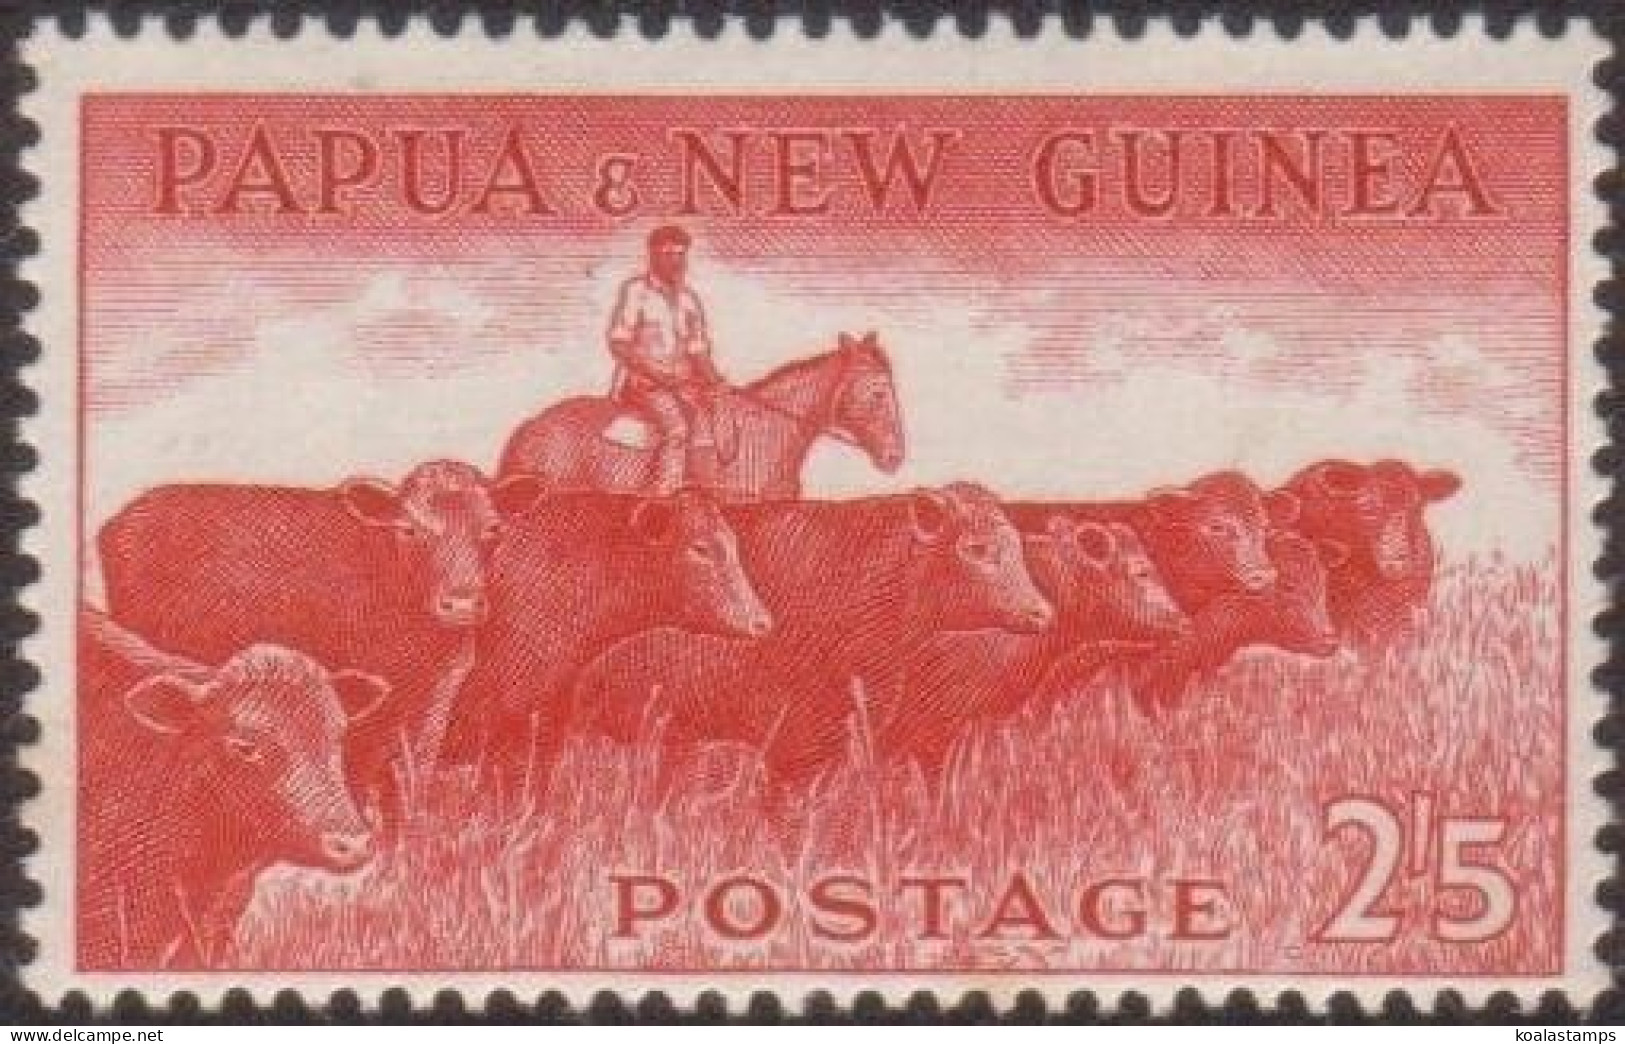 Papua New Guinea 1958 SG23 2/5d Cattle MNH - Papua New Guinea